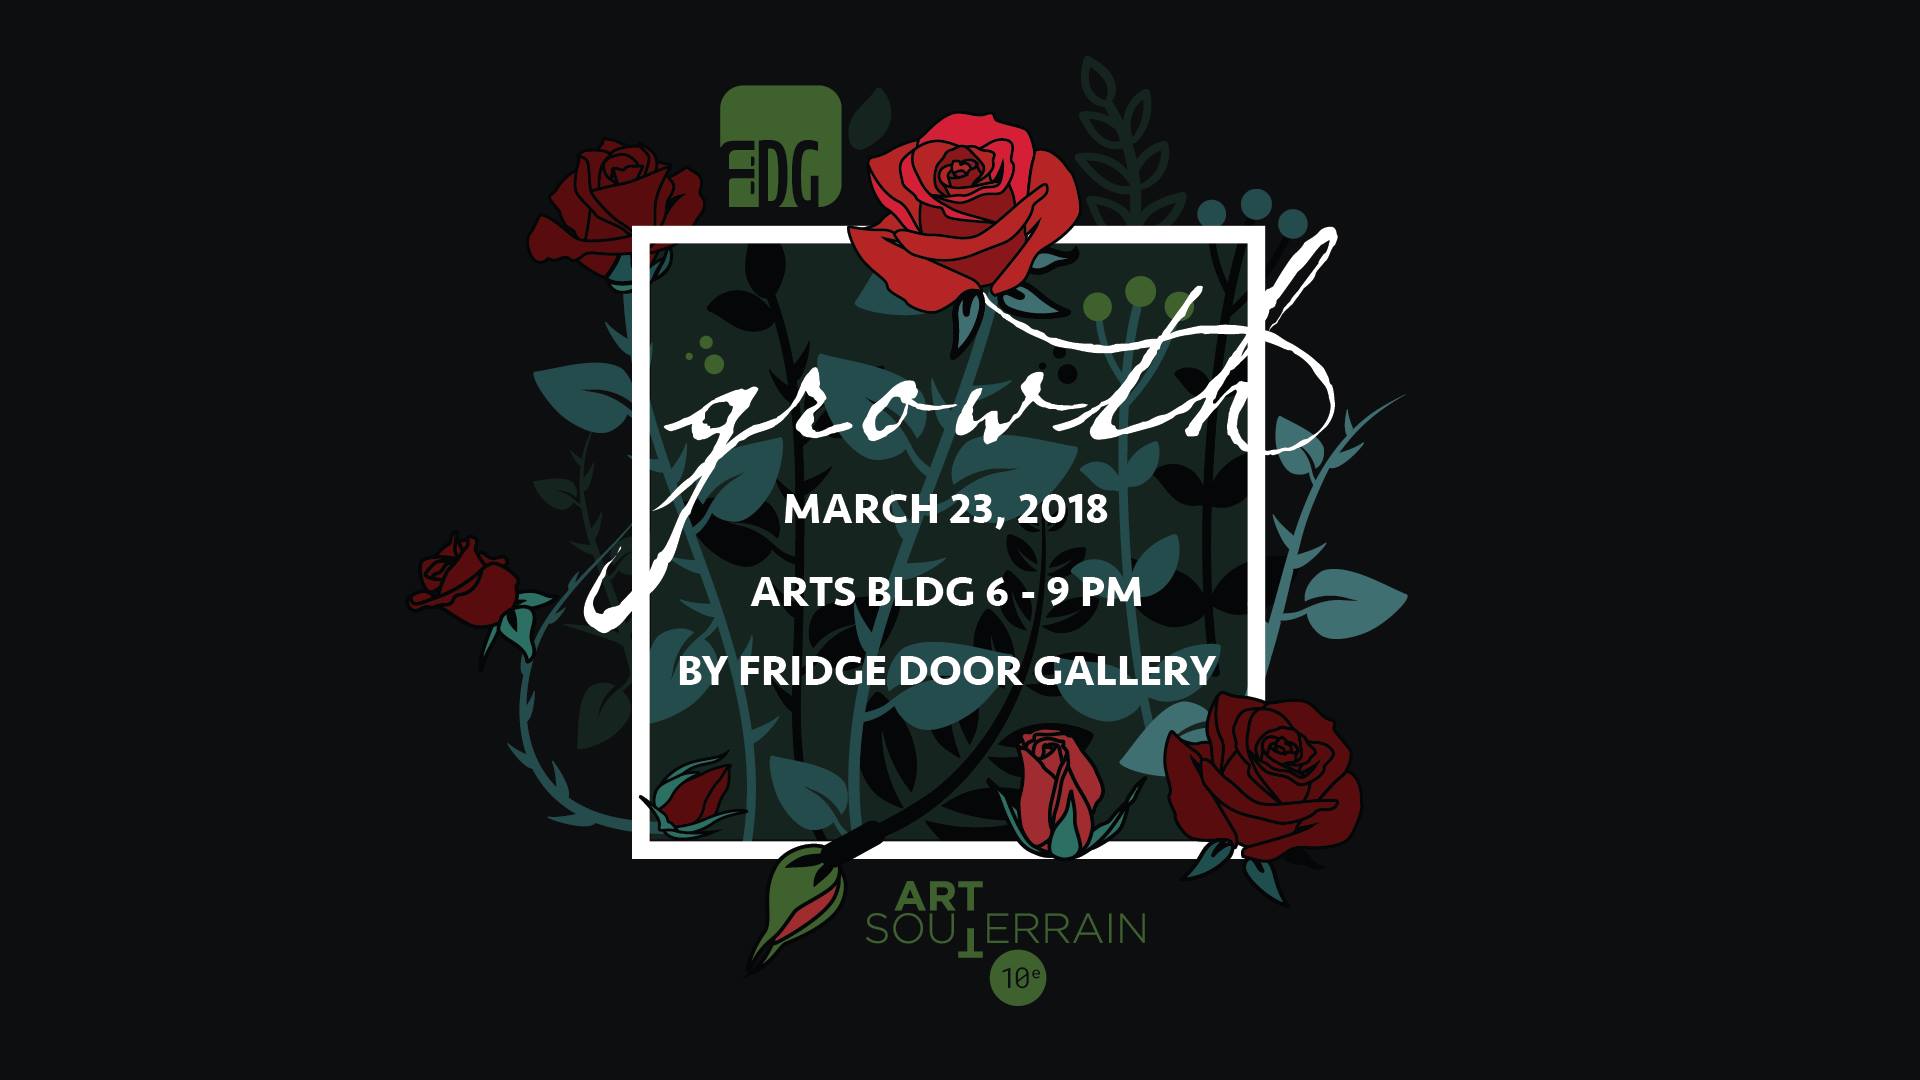 March 23, 2018 - Growth // FDG x Art Souterrain